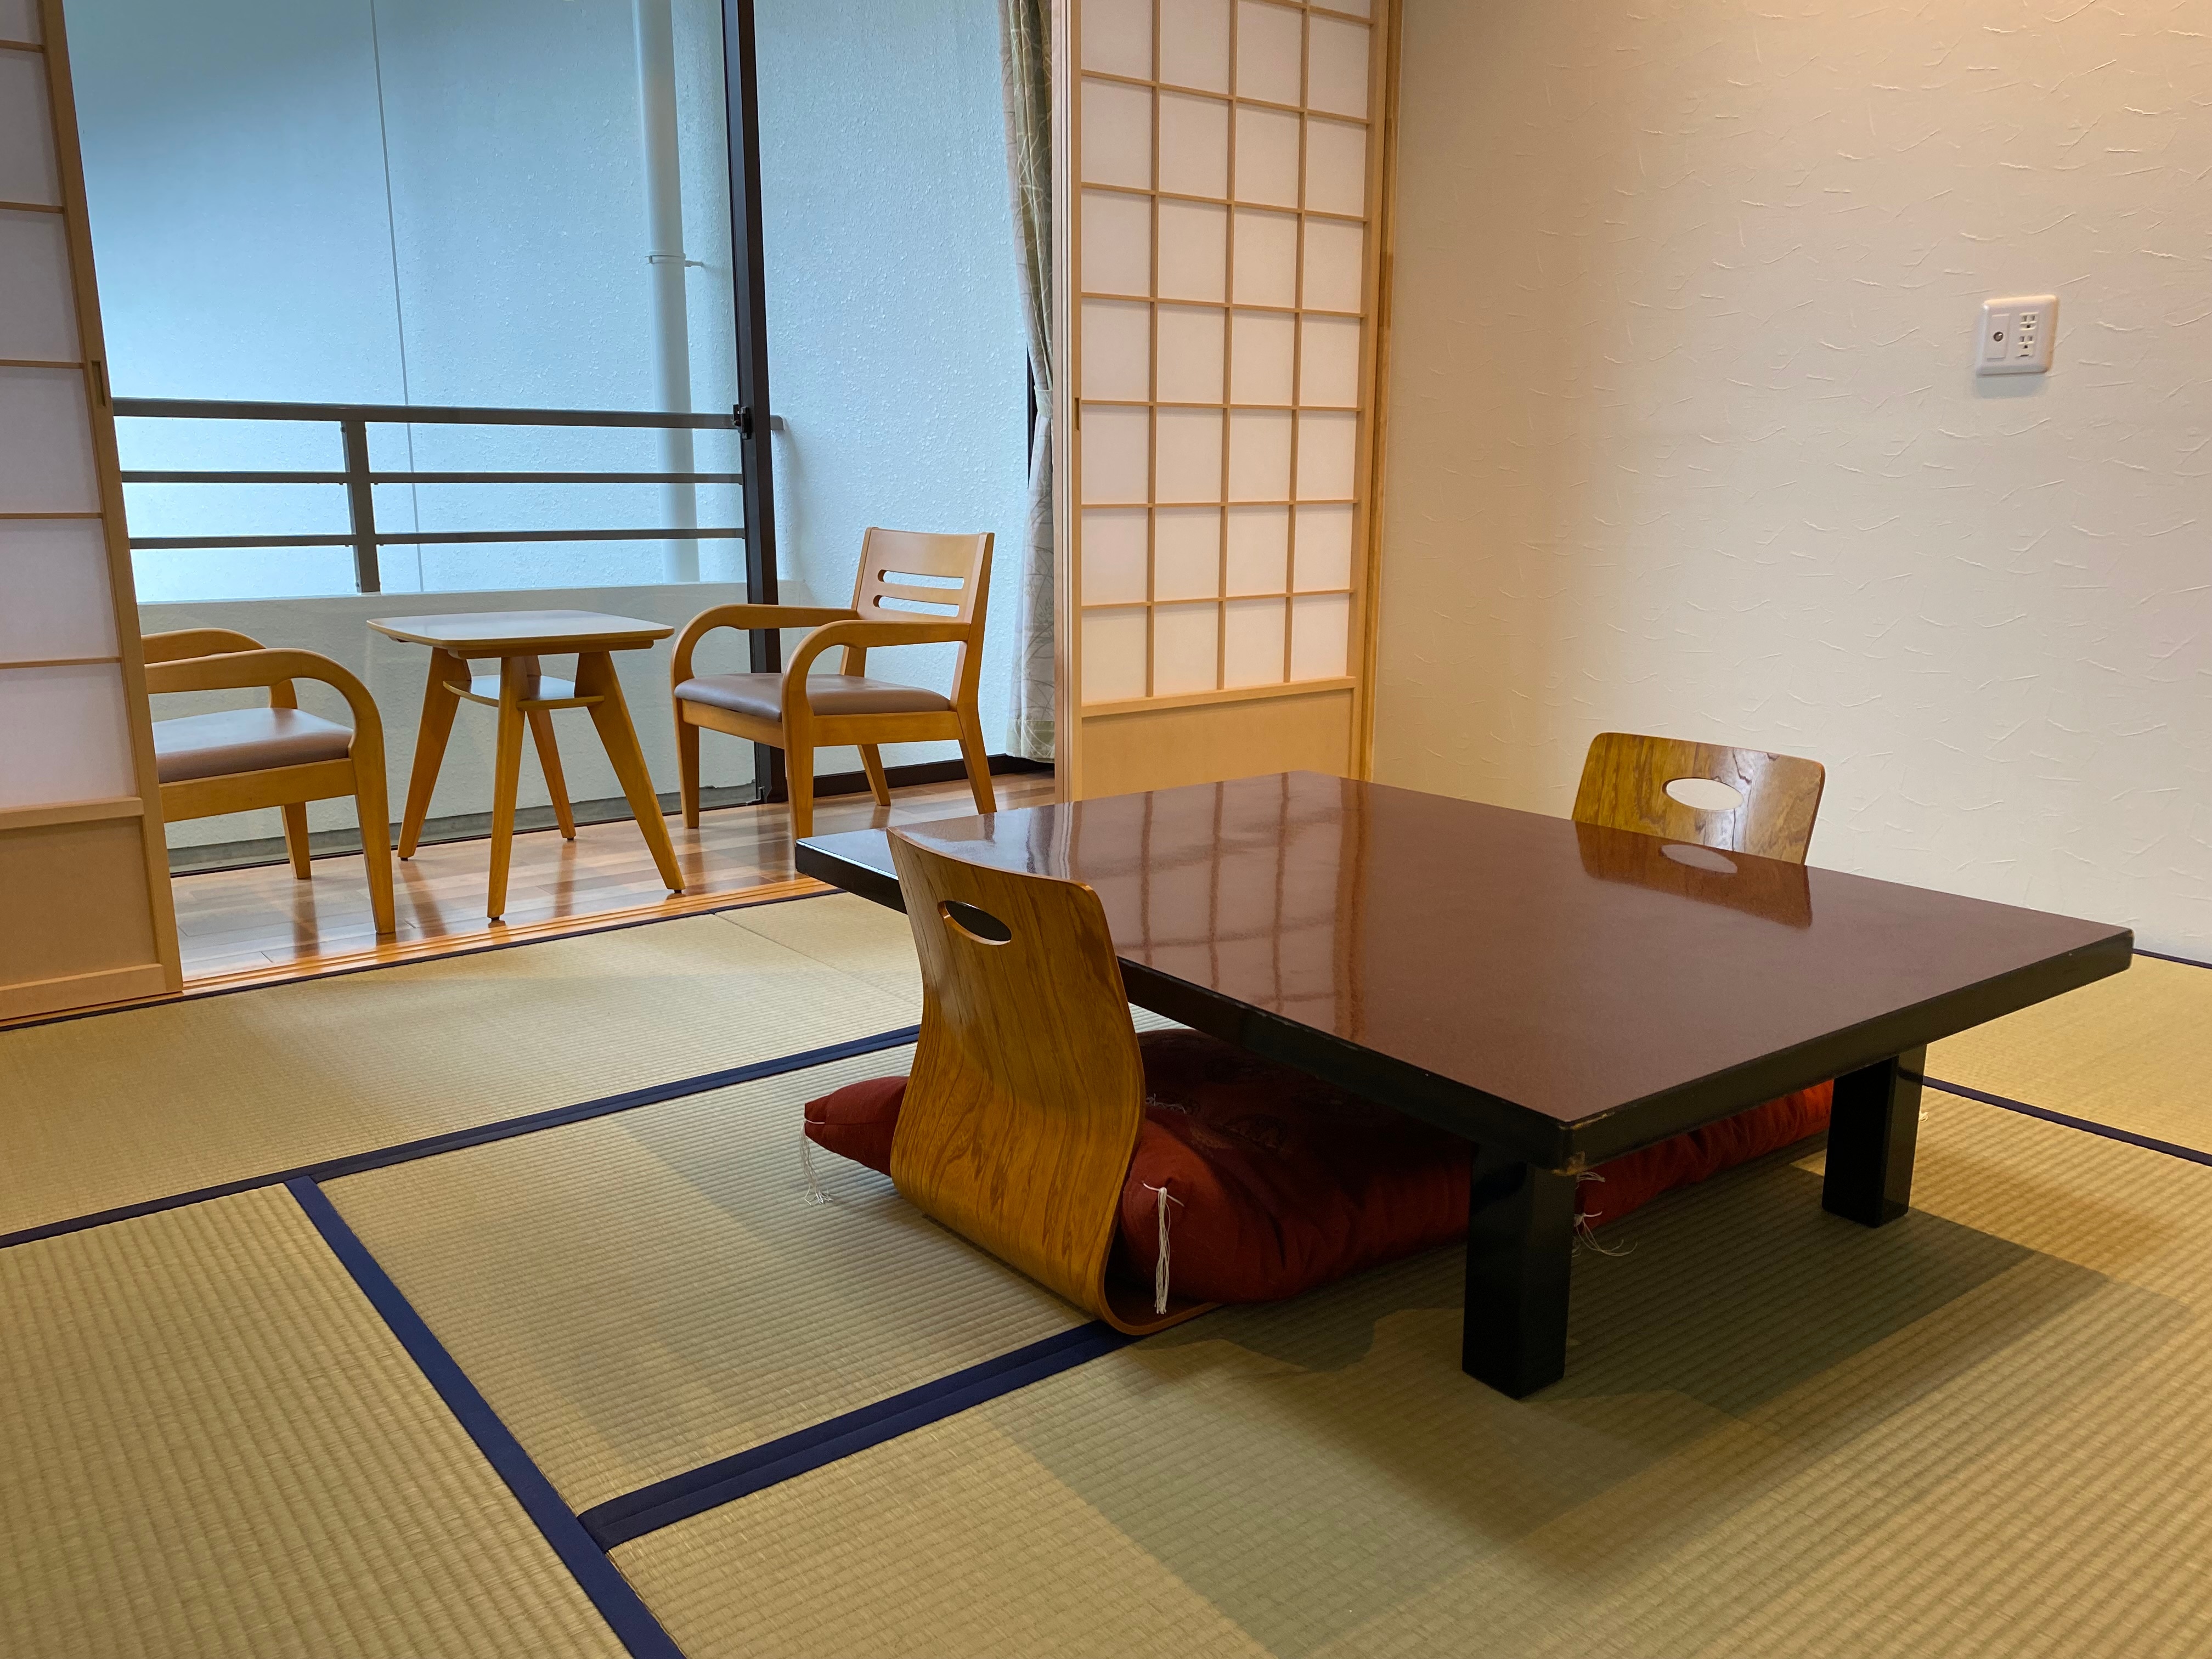 Basic Japanese-style room 8 tatami mats